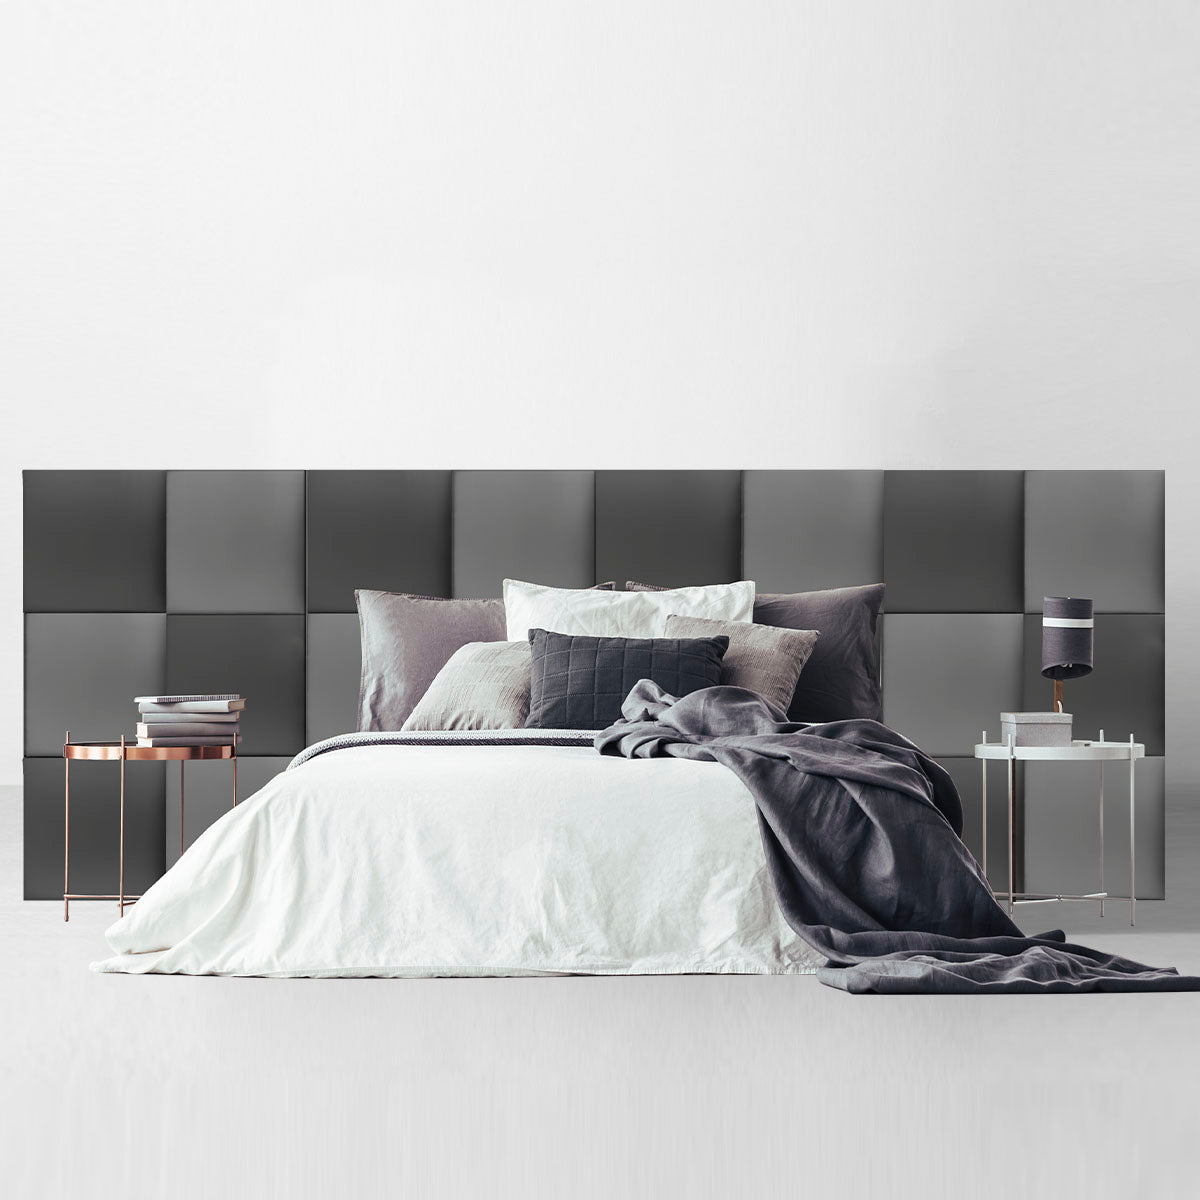 Vuitton Artboard - Nimbus Beds